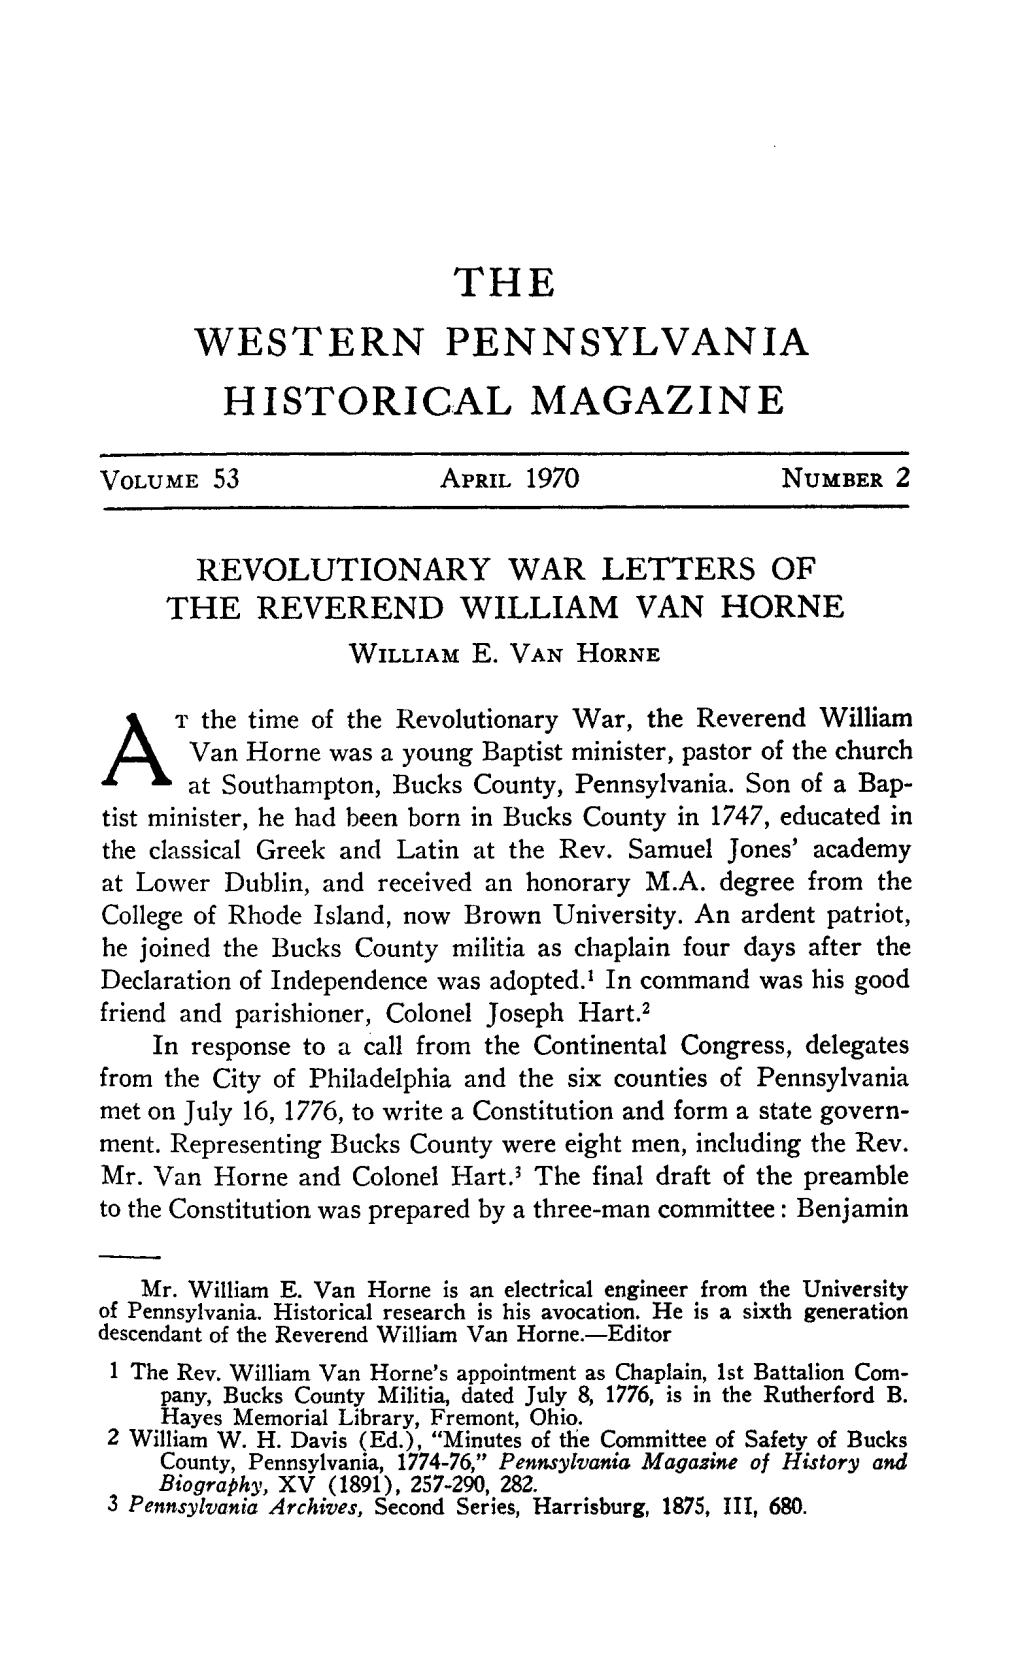 Western Pennsylvania Historical Magazine —